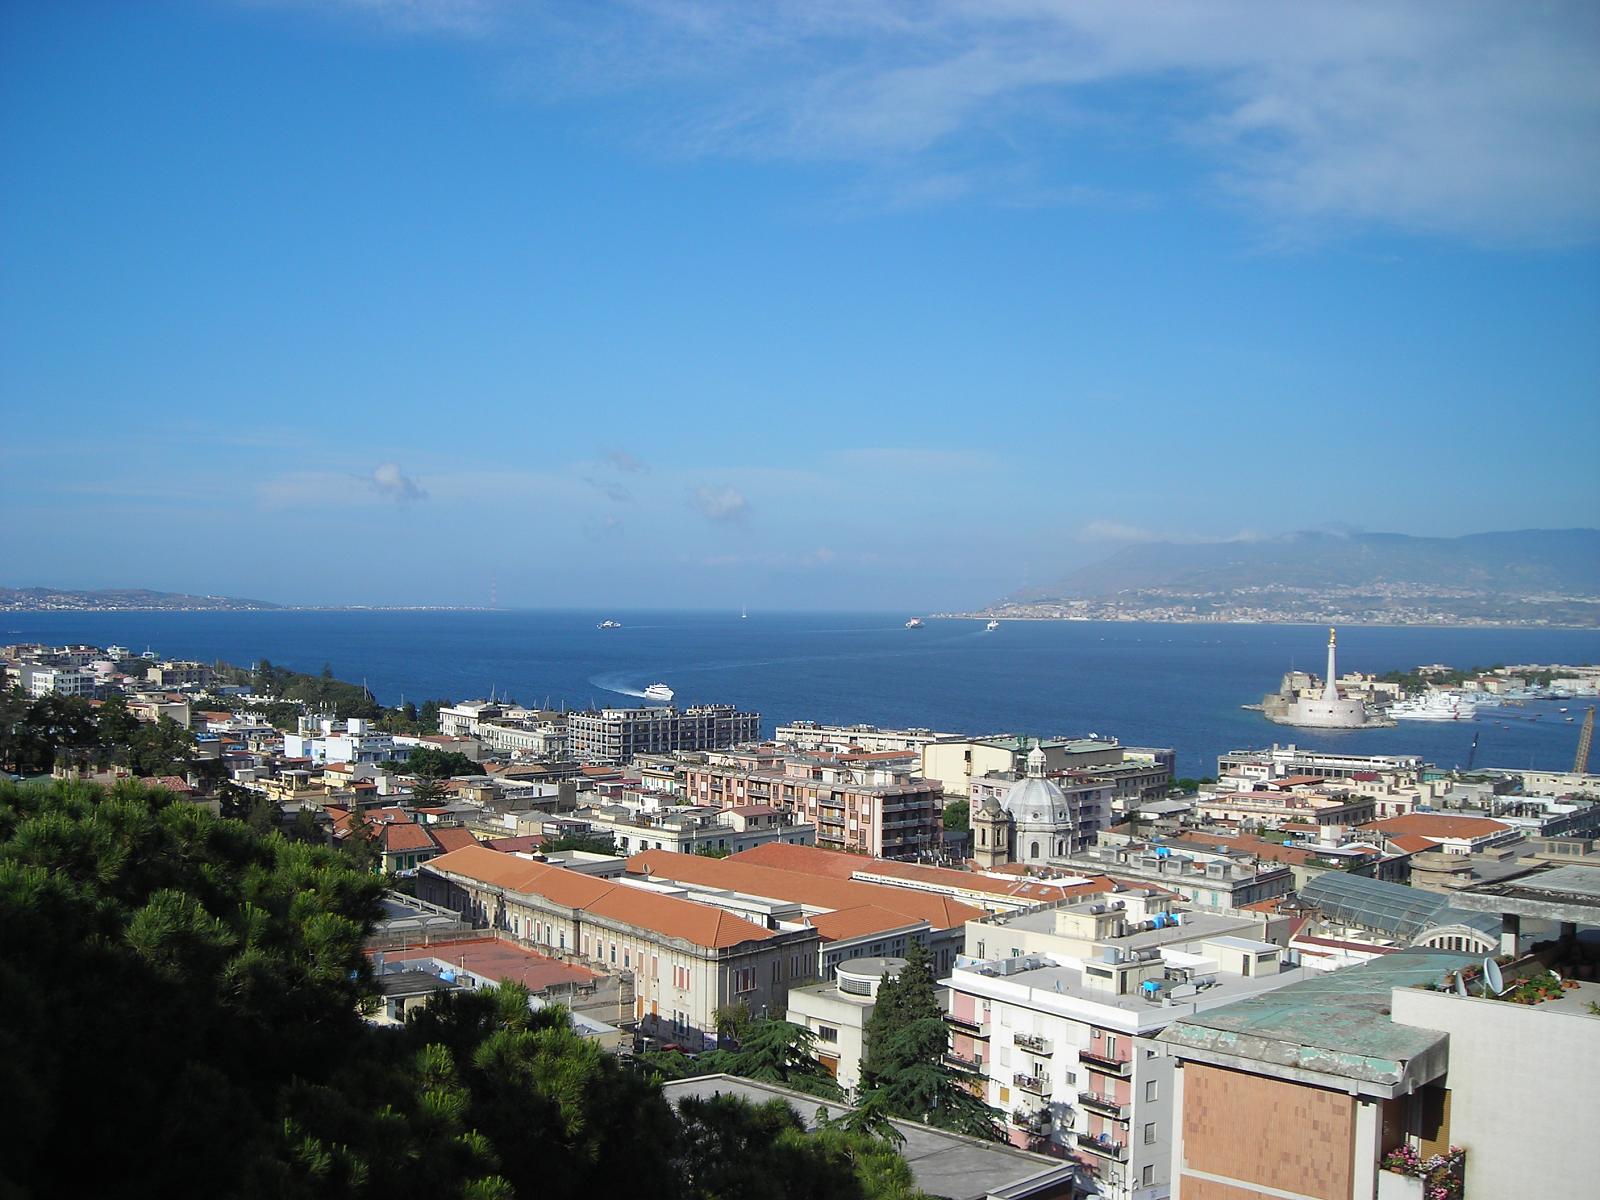 a view over a city near the ocean